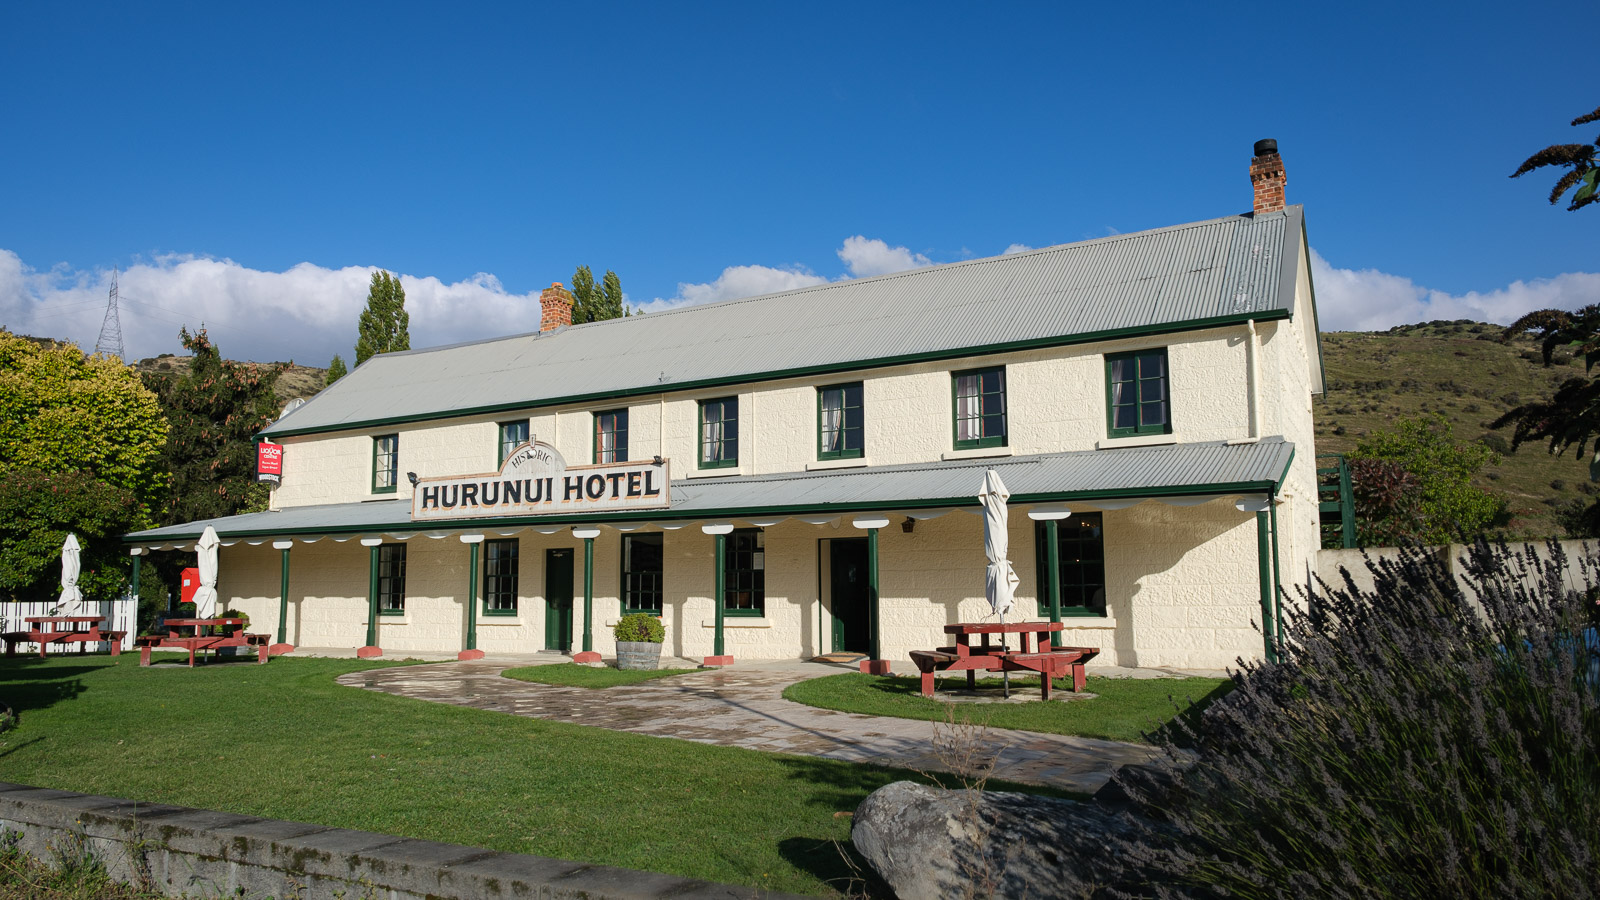 Hurunui Hotel, New Zealand